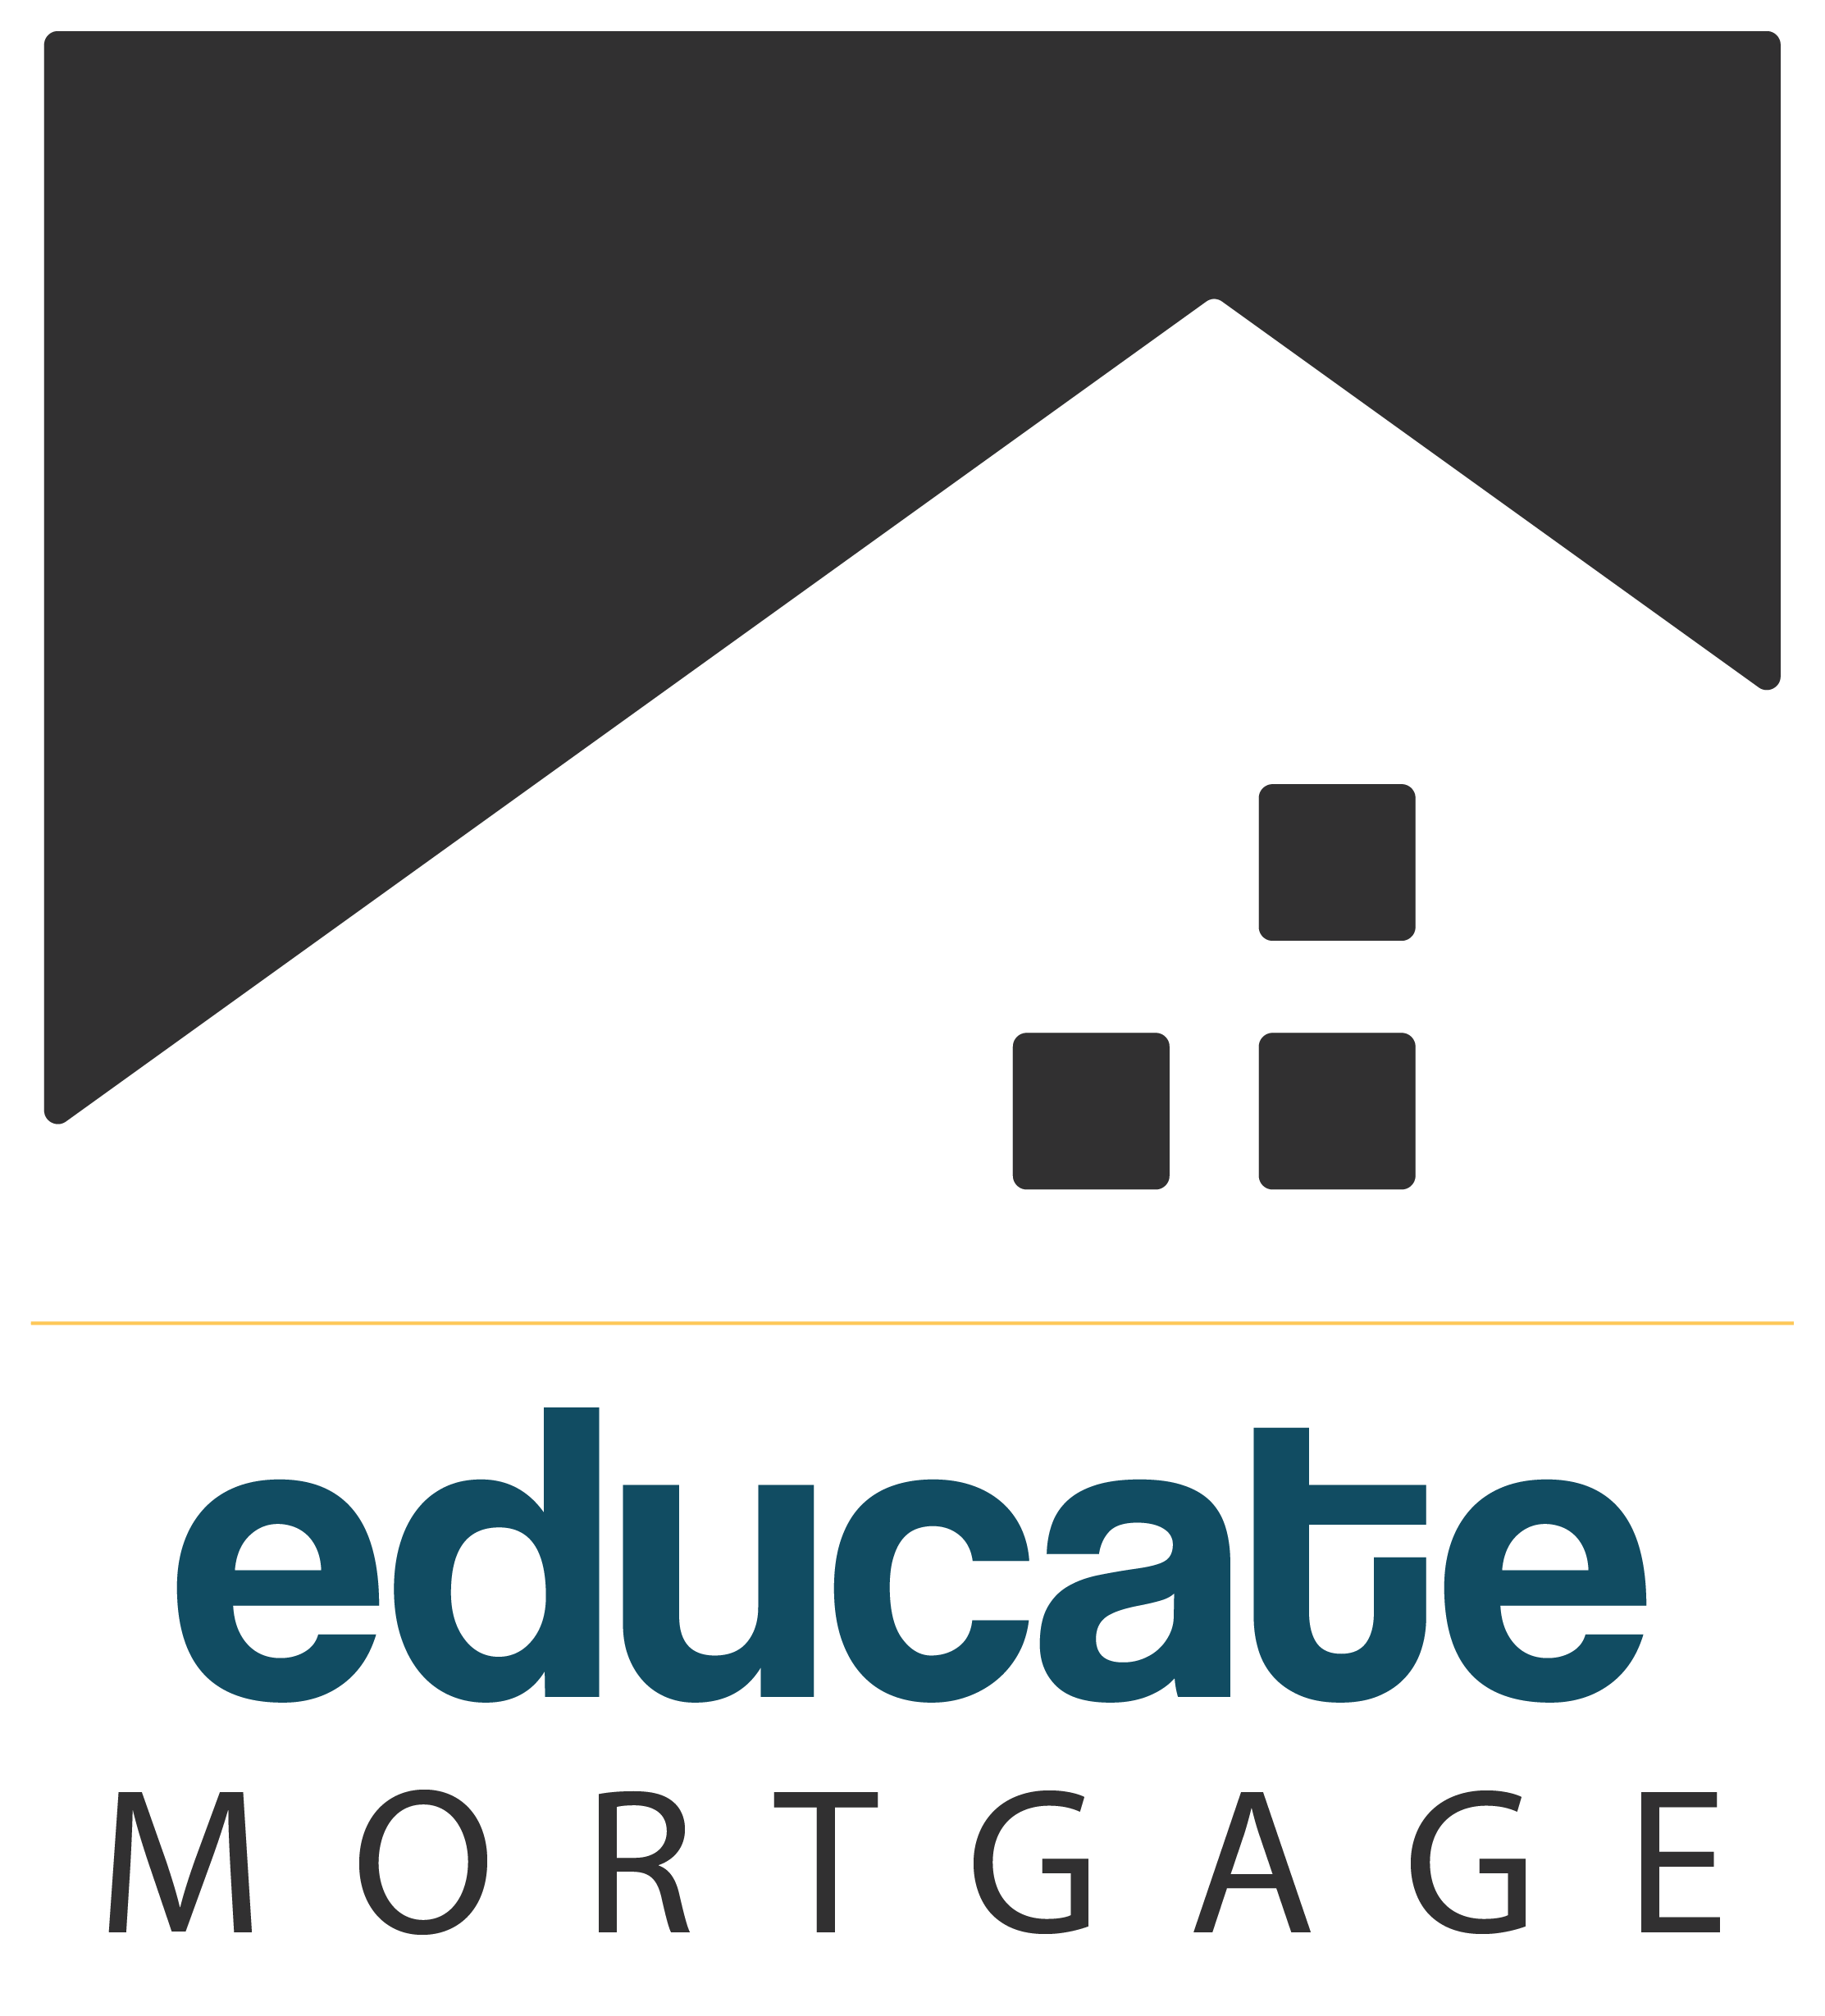 Educate Mortgage